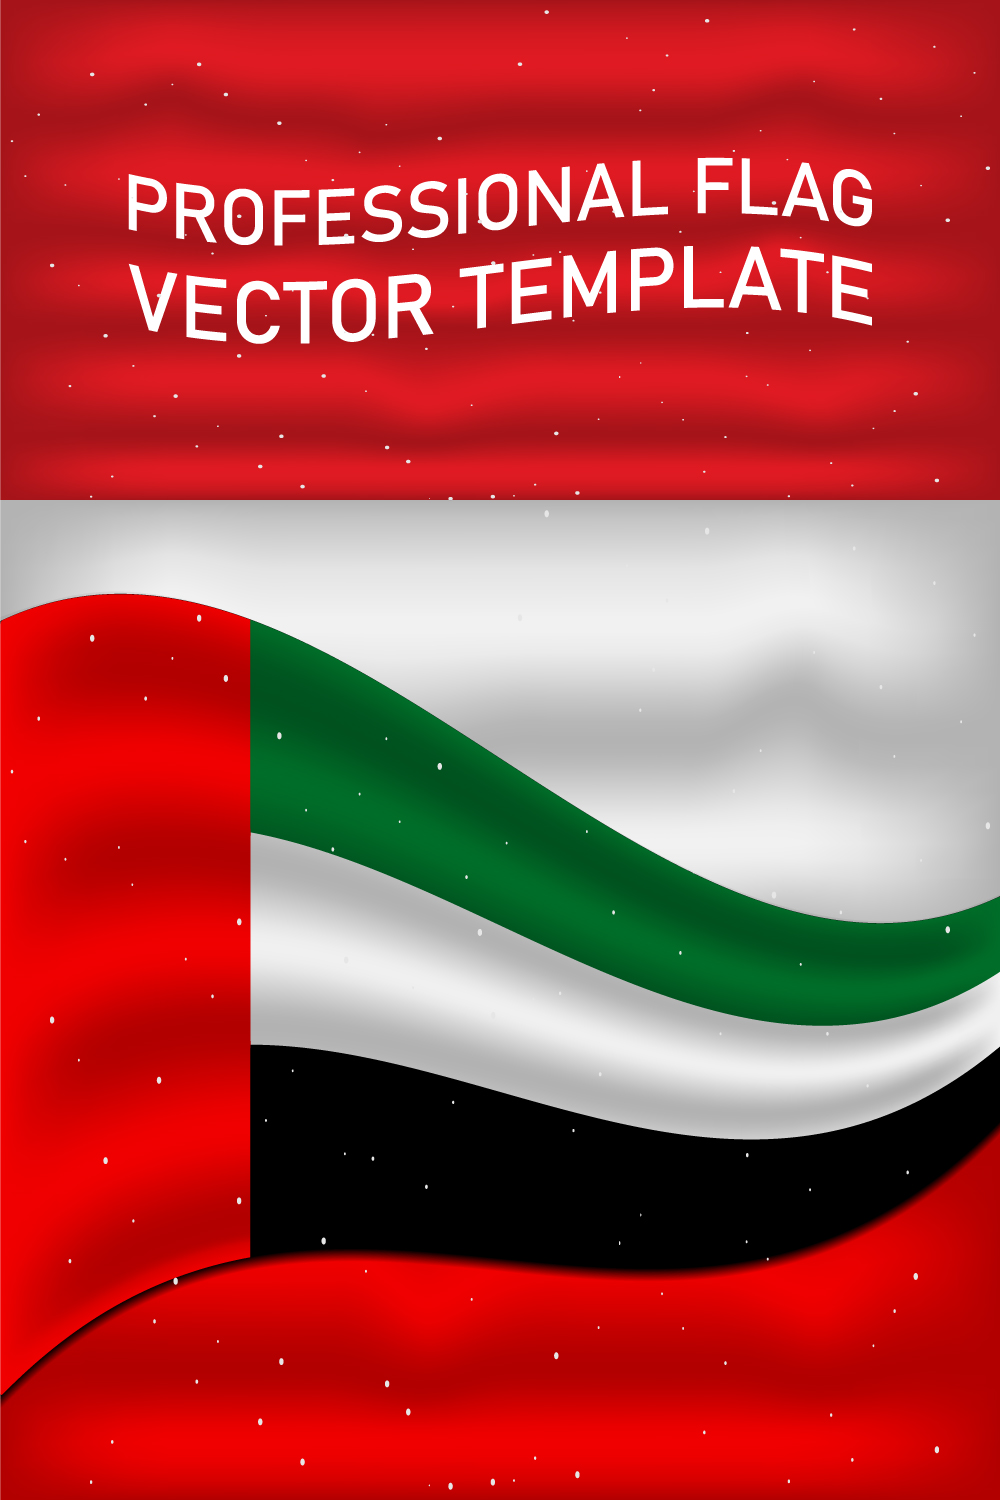 Magnificent image of the United Arab Emirates flag.